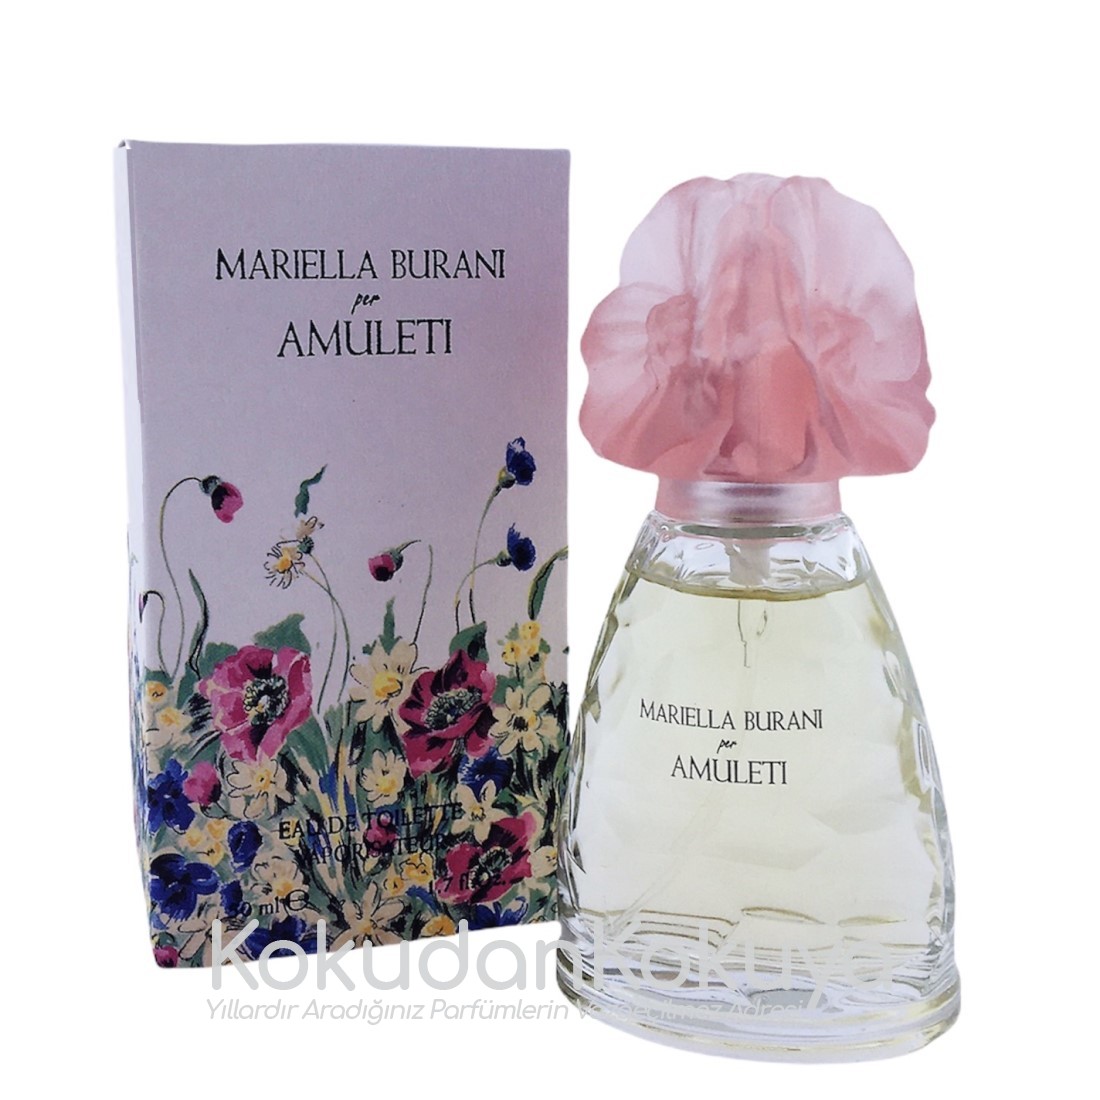 MARIELLA BURANI Amuleti Women (Vintage) Parfüm Kadın 50ml Eau De Toilette (EDT) Sprey 